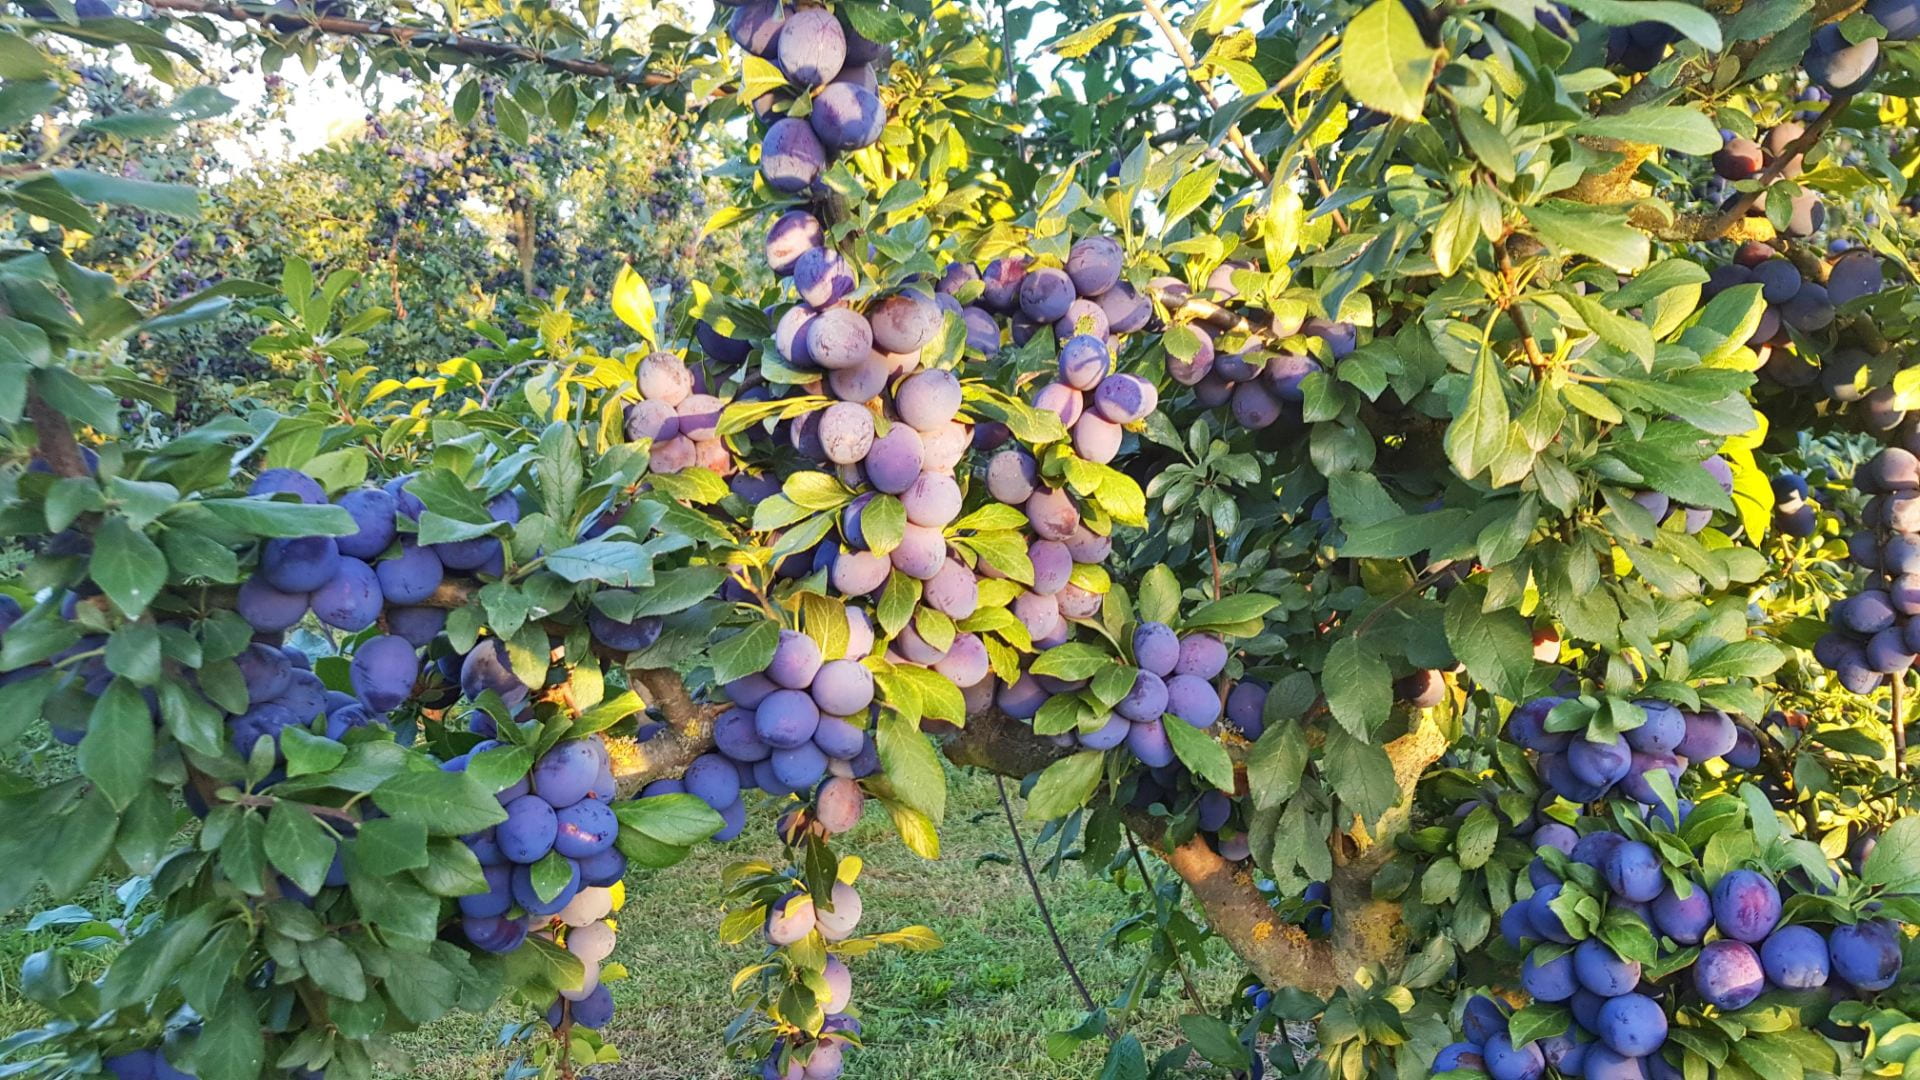 Damson plums on a tree